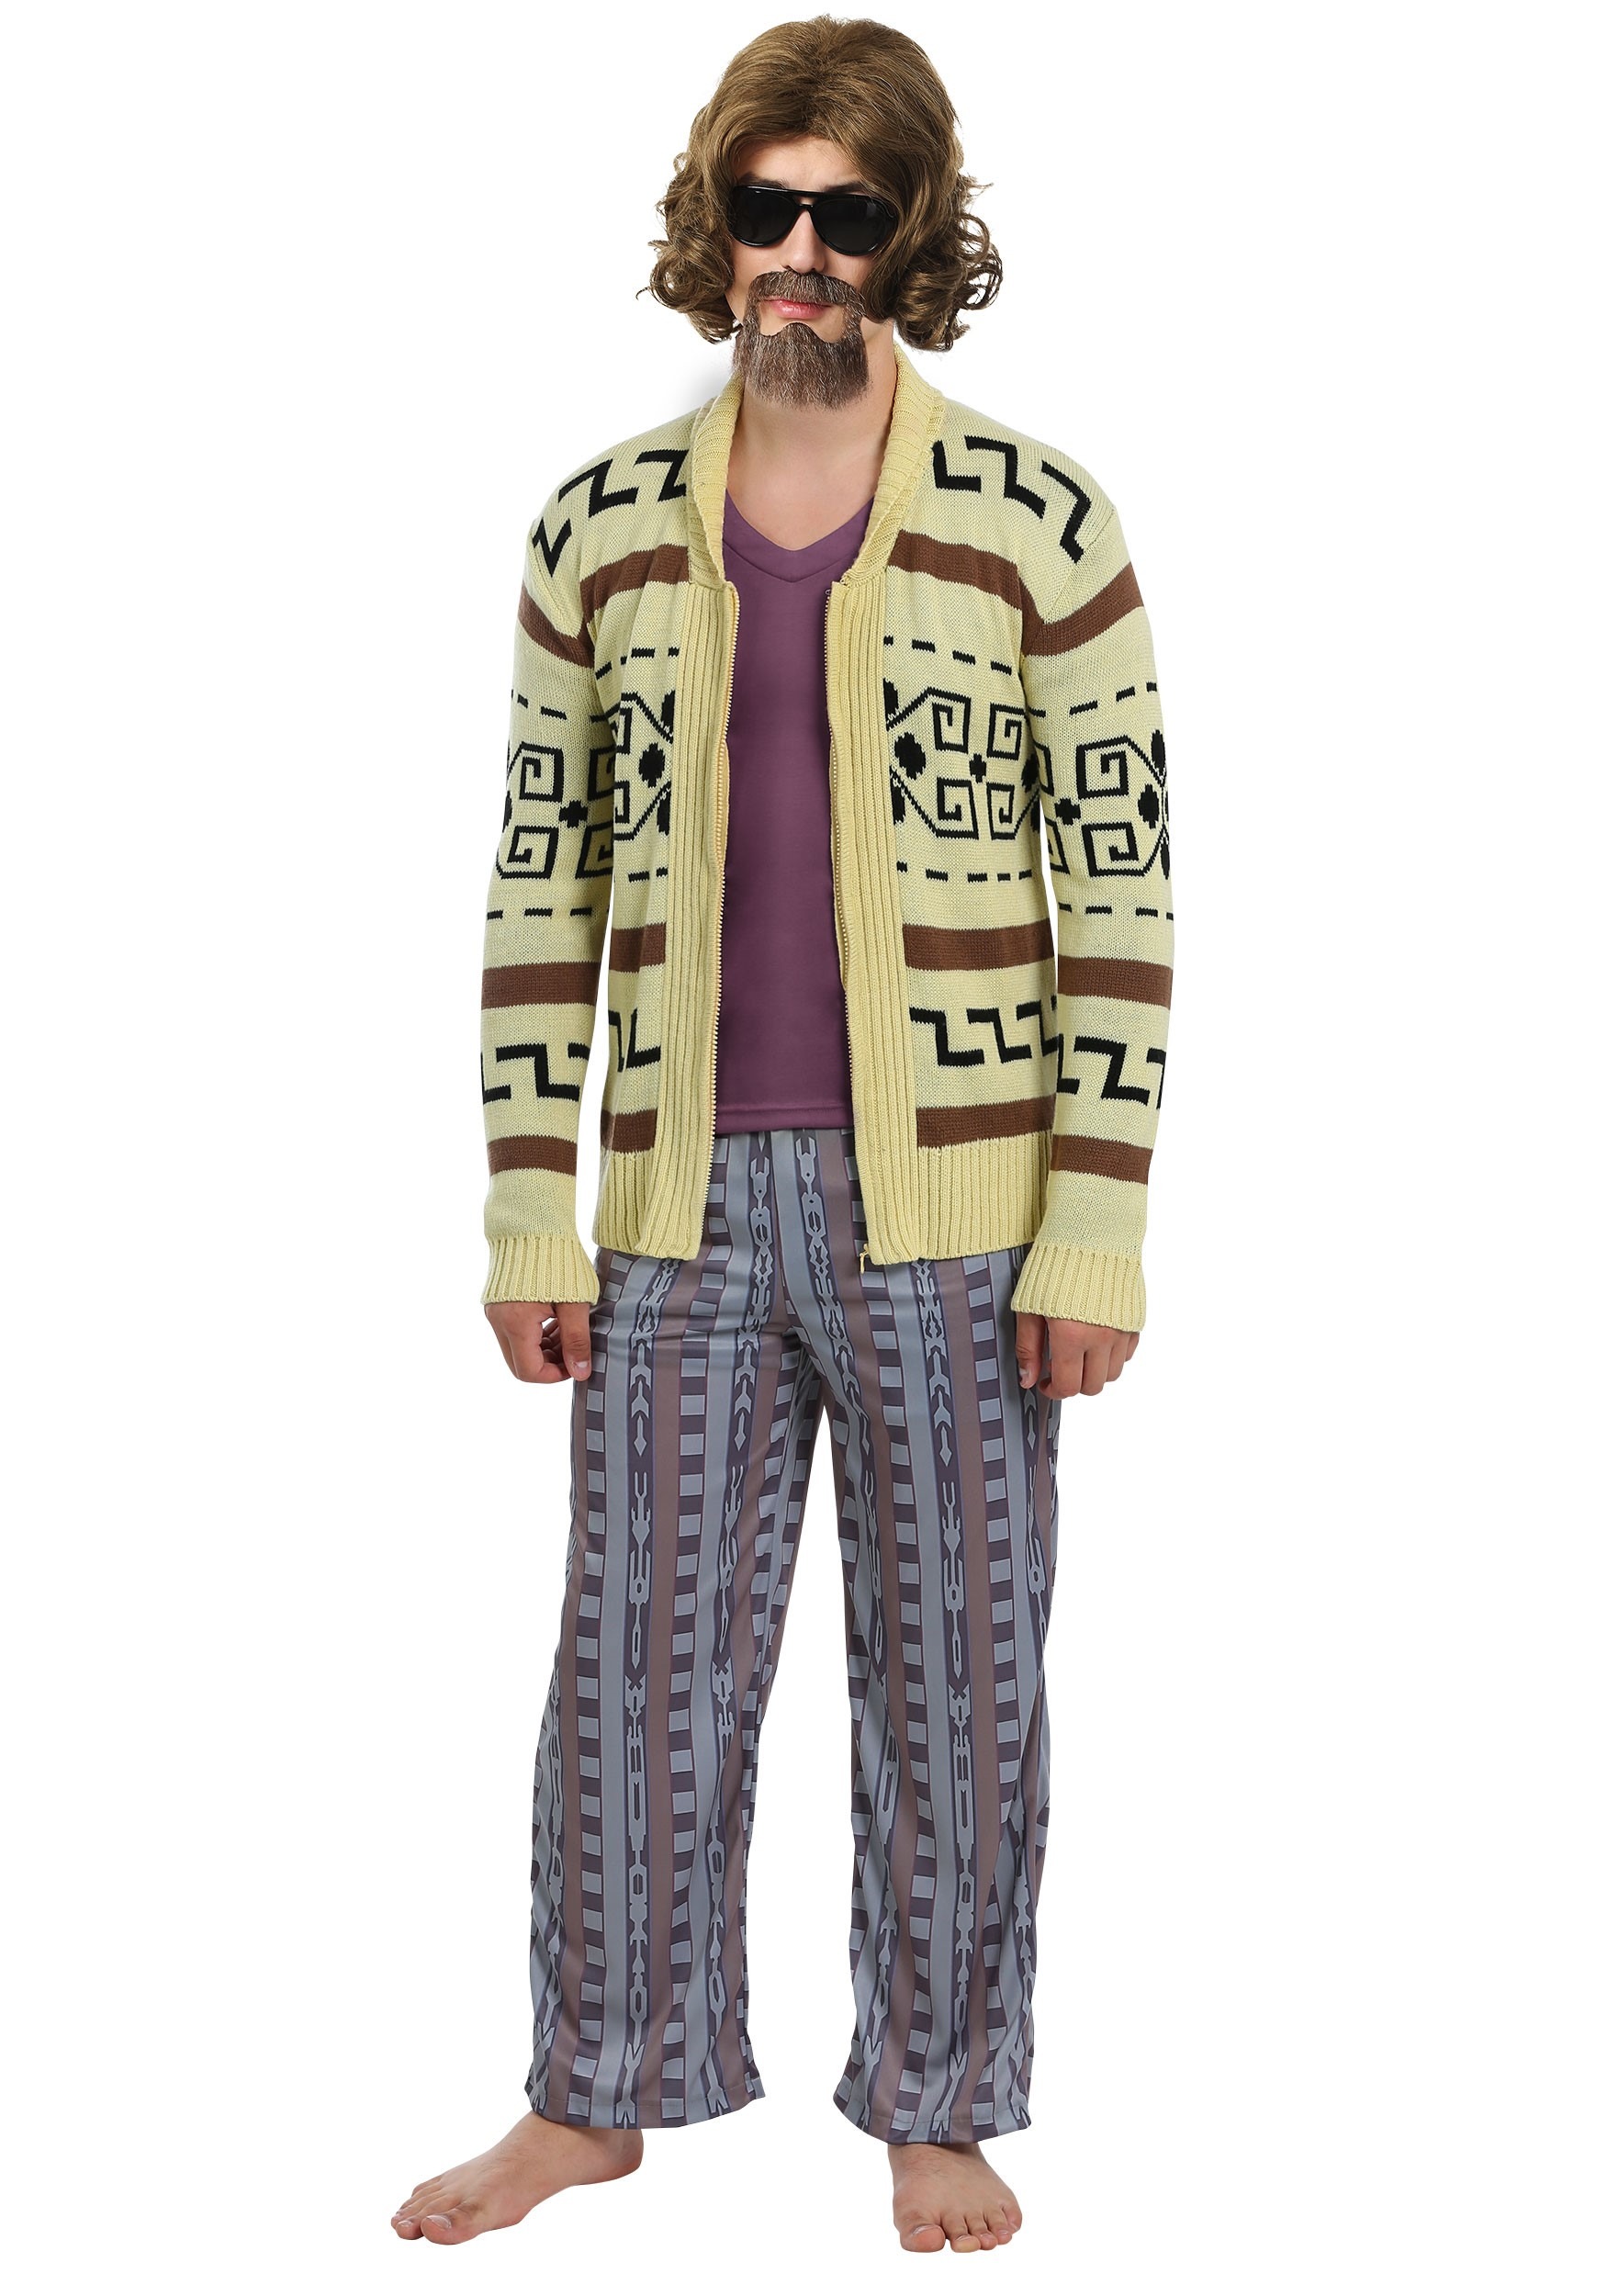 Image of The Big Lebowski The Dude Men's Plus Size Sweater Costume 2X ID FUN6331PL-2X